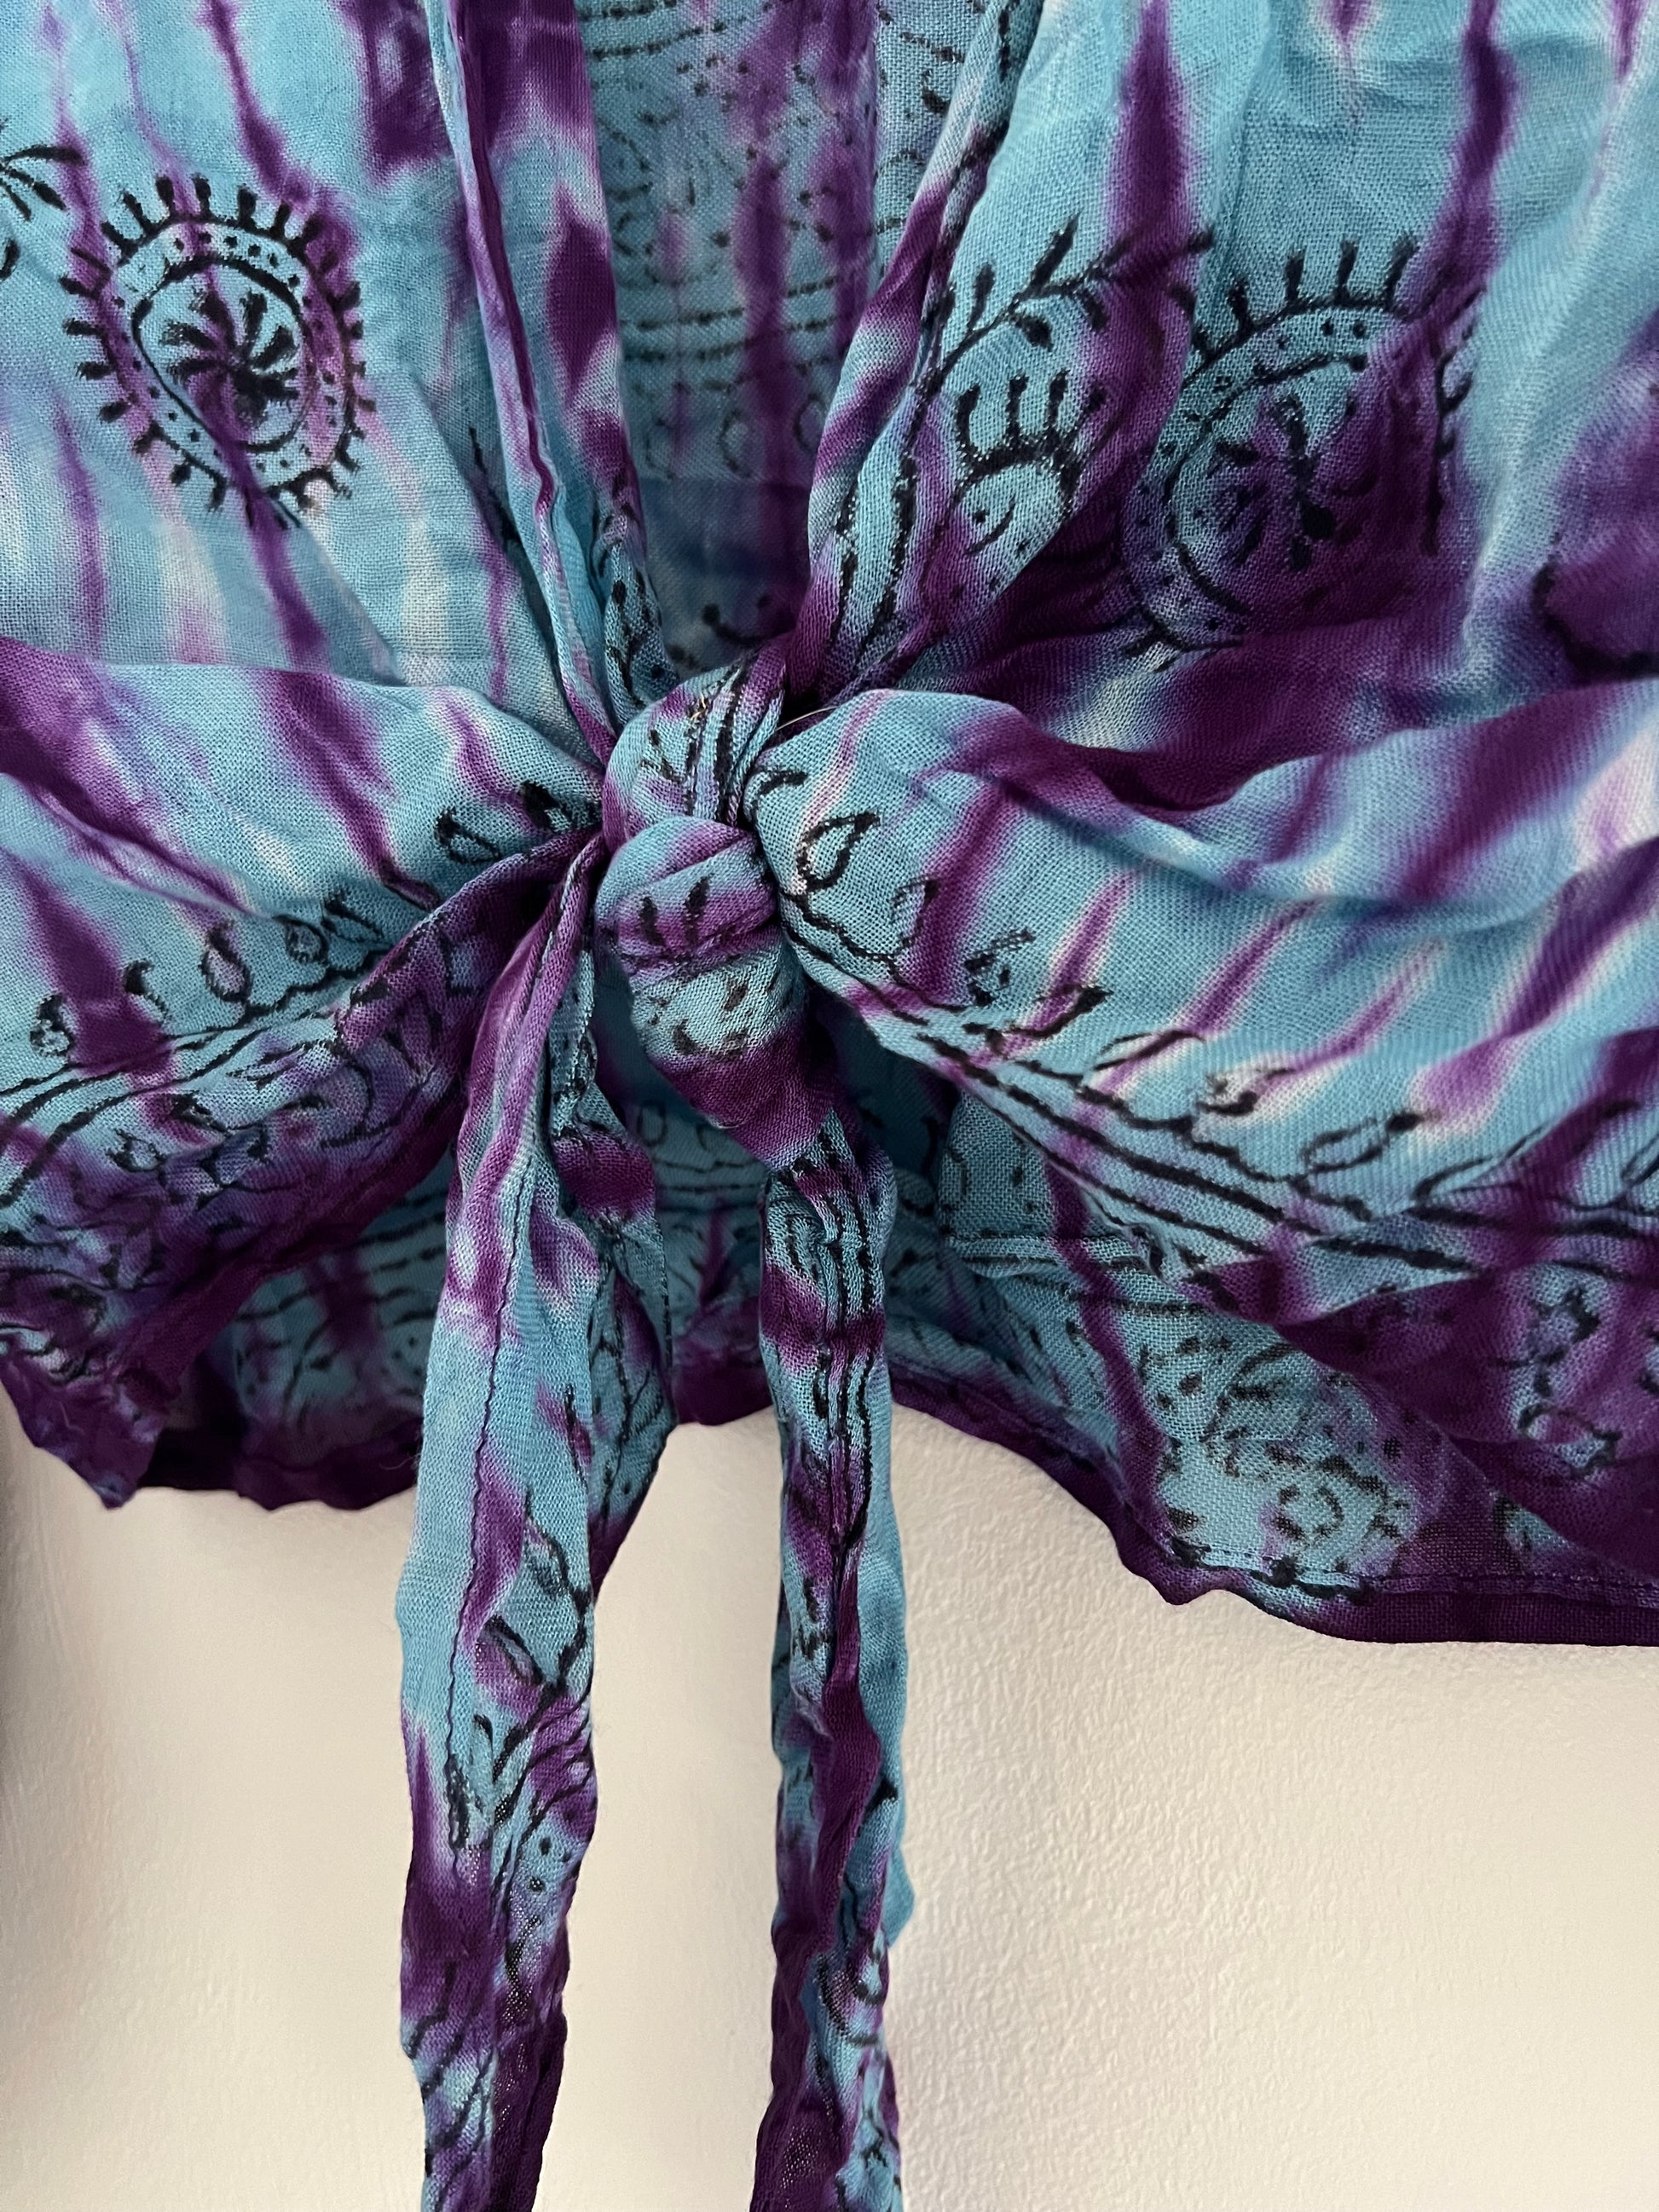 Handmade Fair Trade Hippie Boho Blue & Purple Prayer Top Slow Fashion 